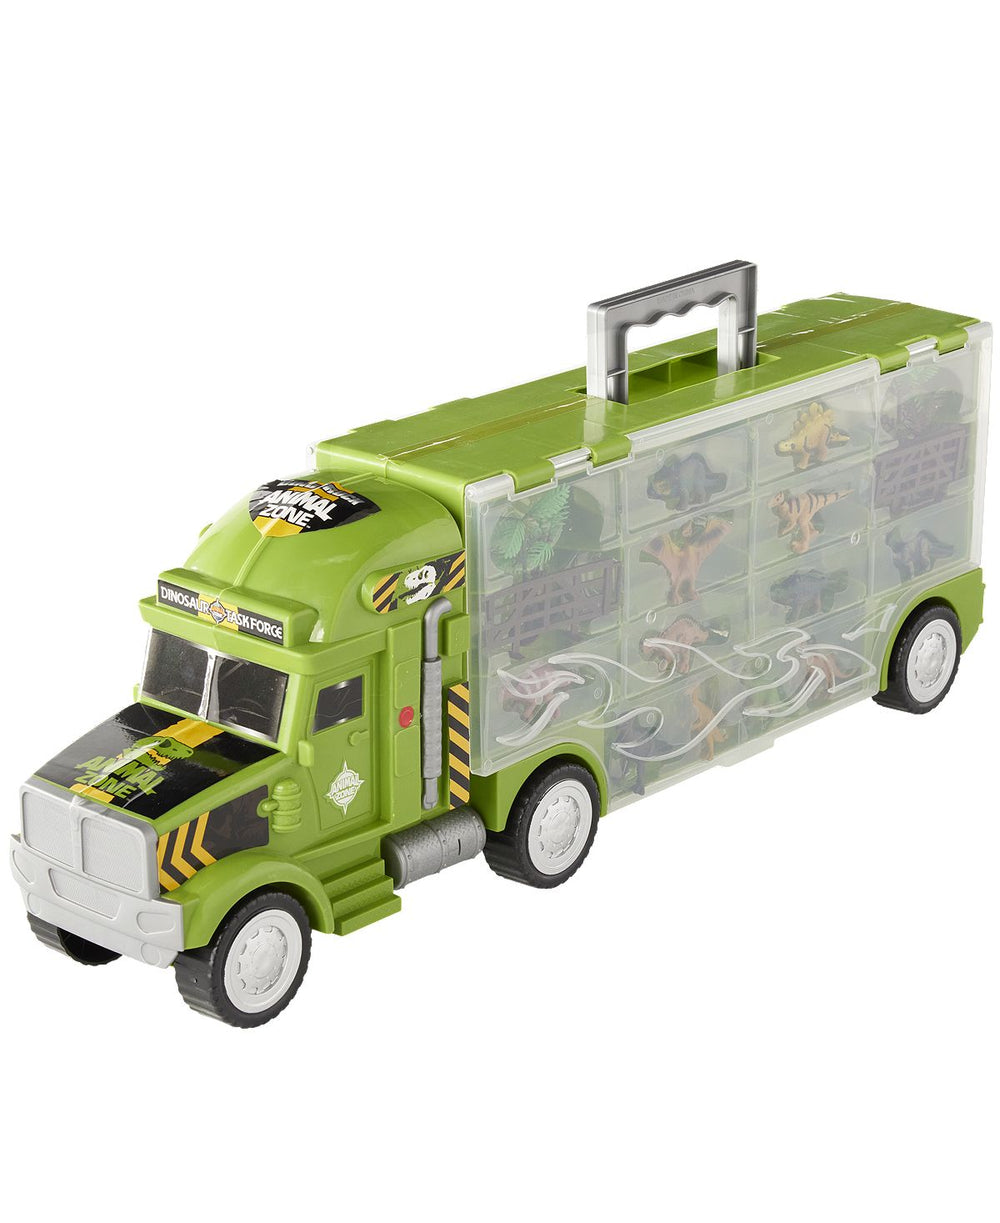 Toys R Us Animal Zone Dino Transport Truck Playset - Green